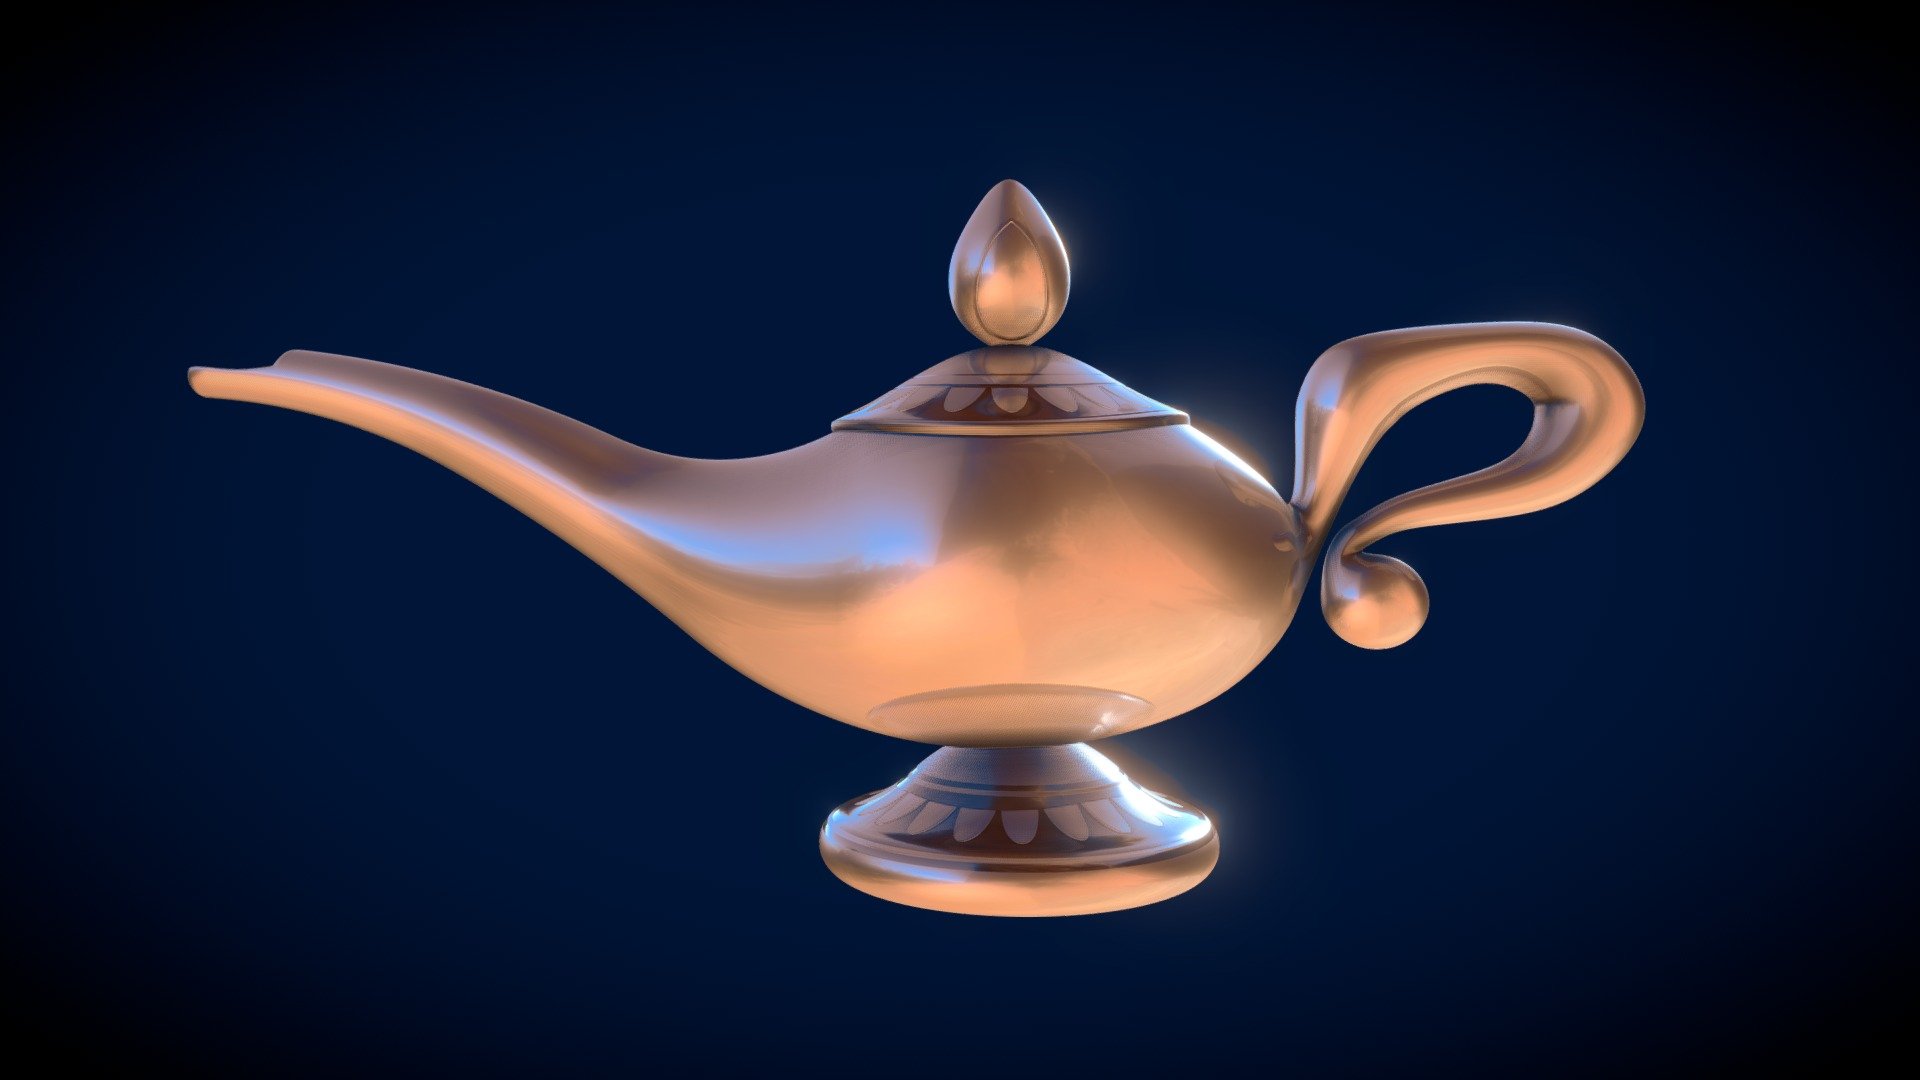 magic lamp aladdin